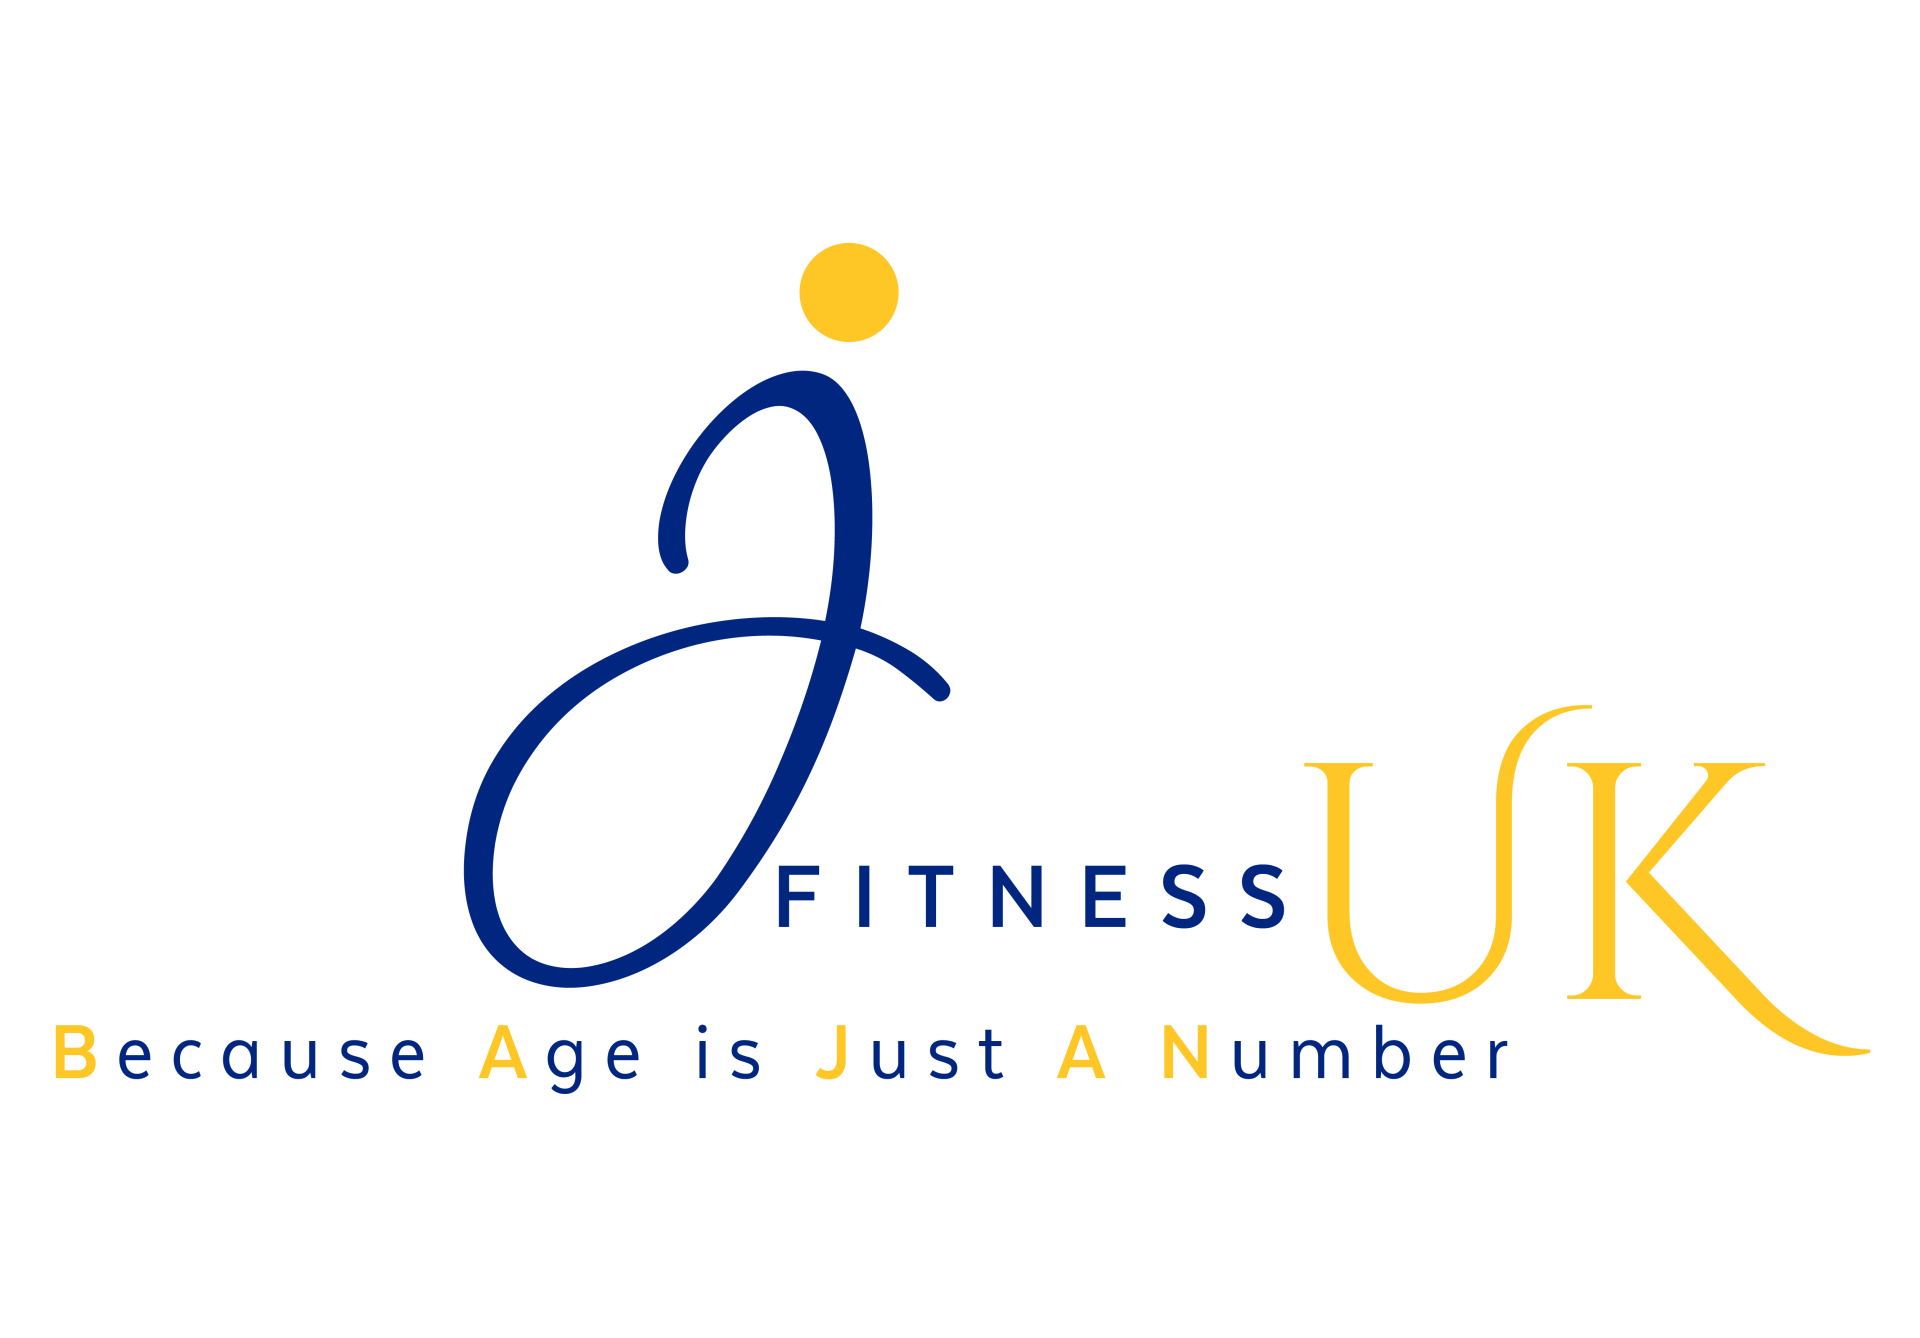 BajanFitness Uk hoistic personal trainer website logo